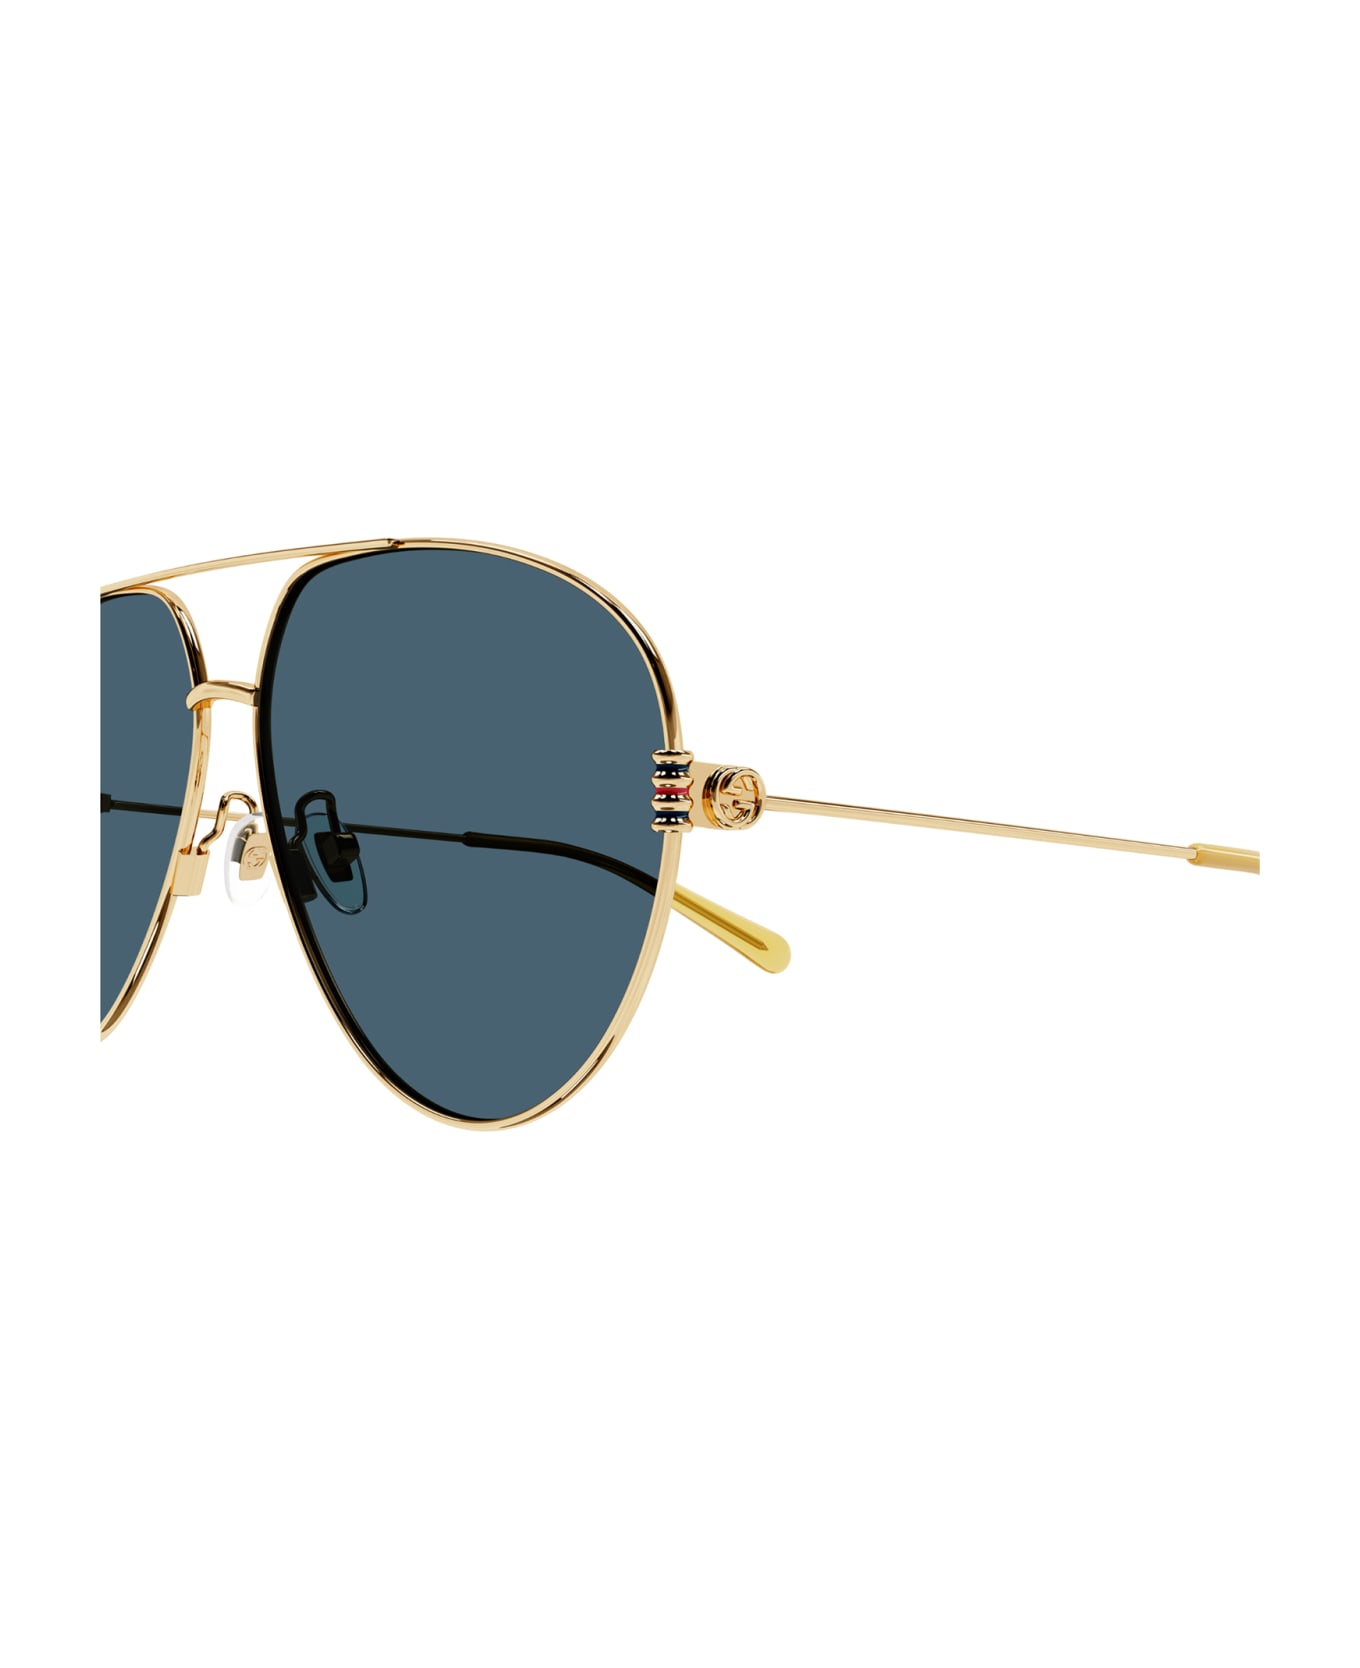 Gucci Eyewear Gg1280s Sunglasses - 003 gold gold blue サングラス